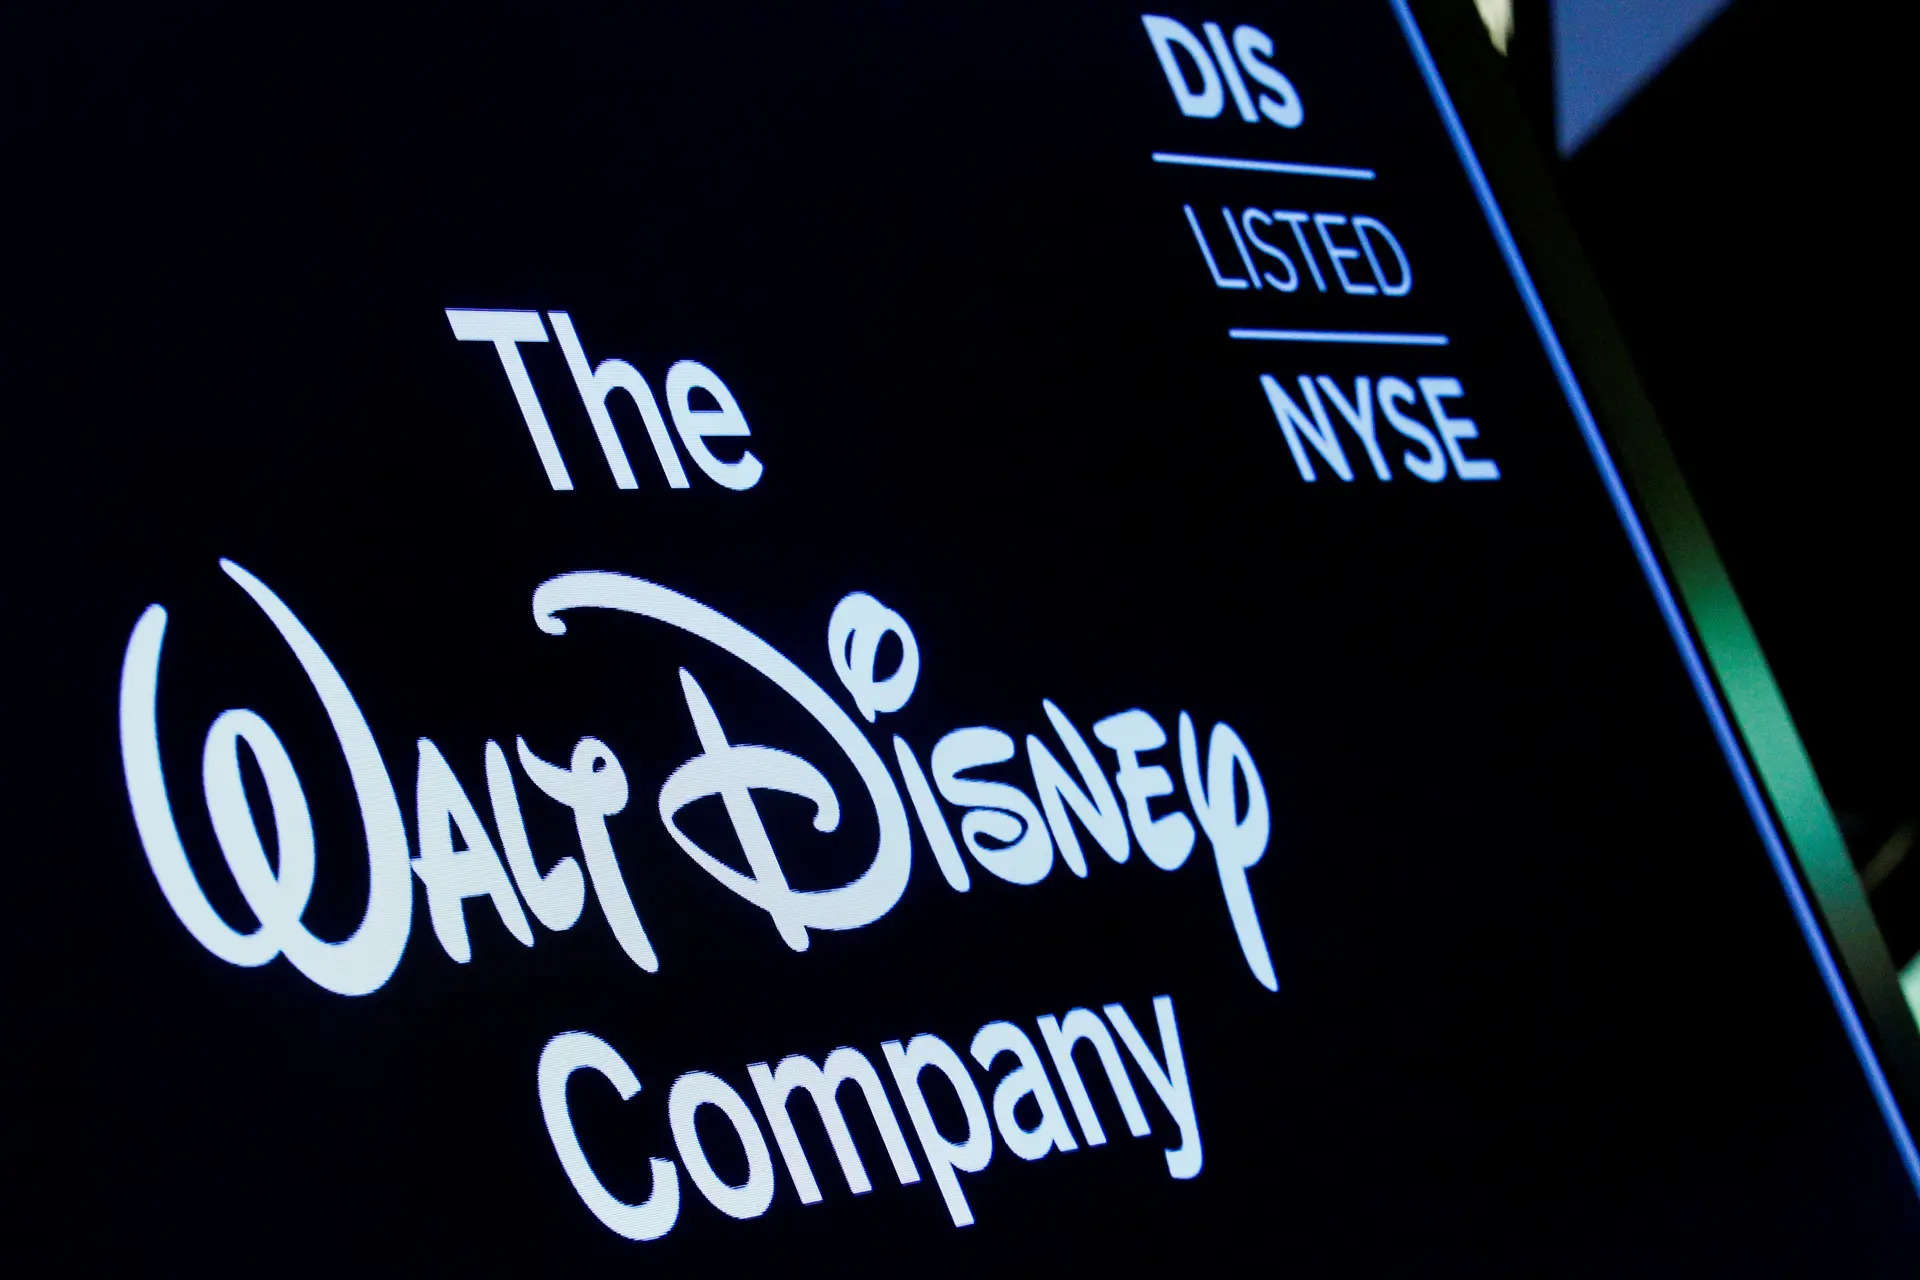 Disney's internal communications leaked online after hack, WSJ reports 